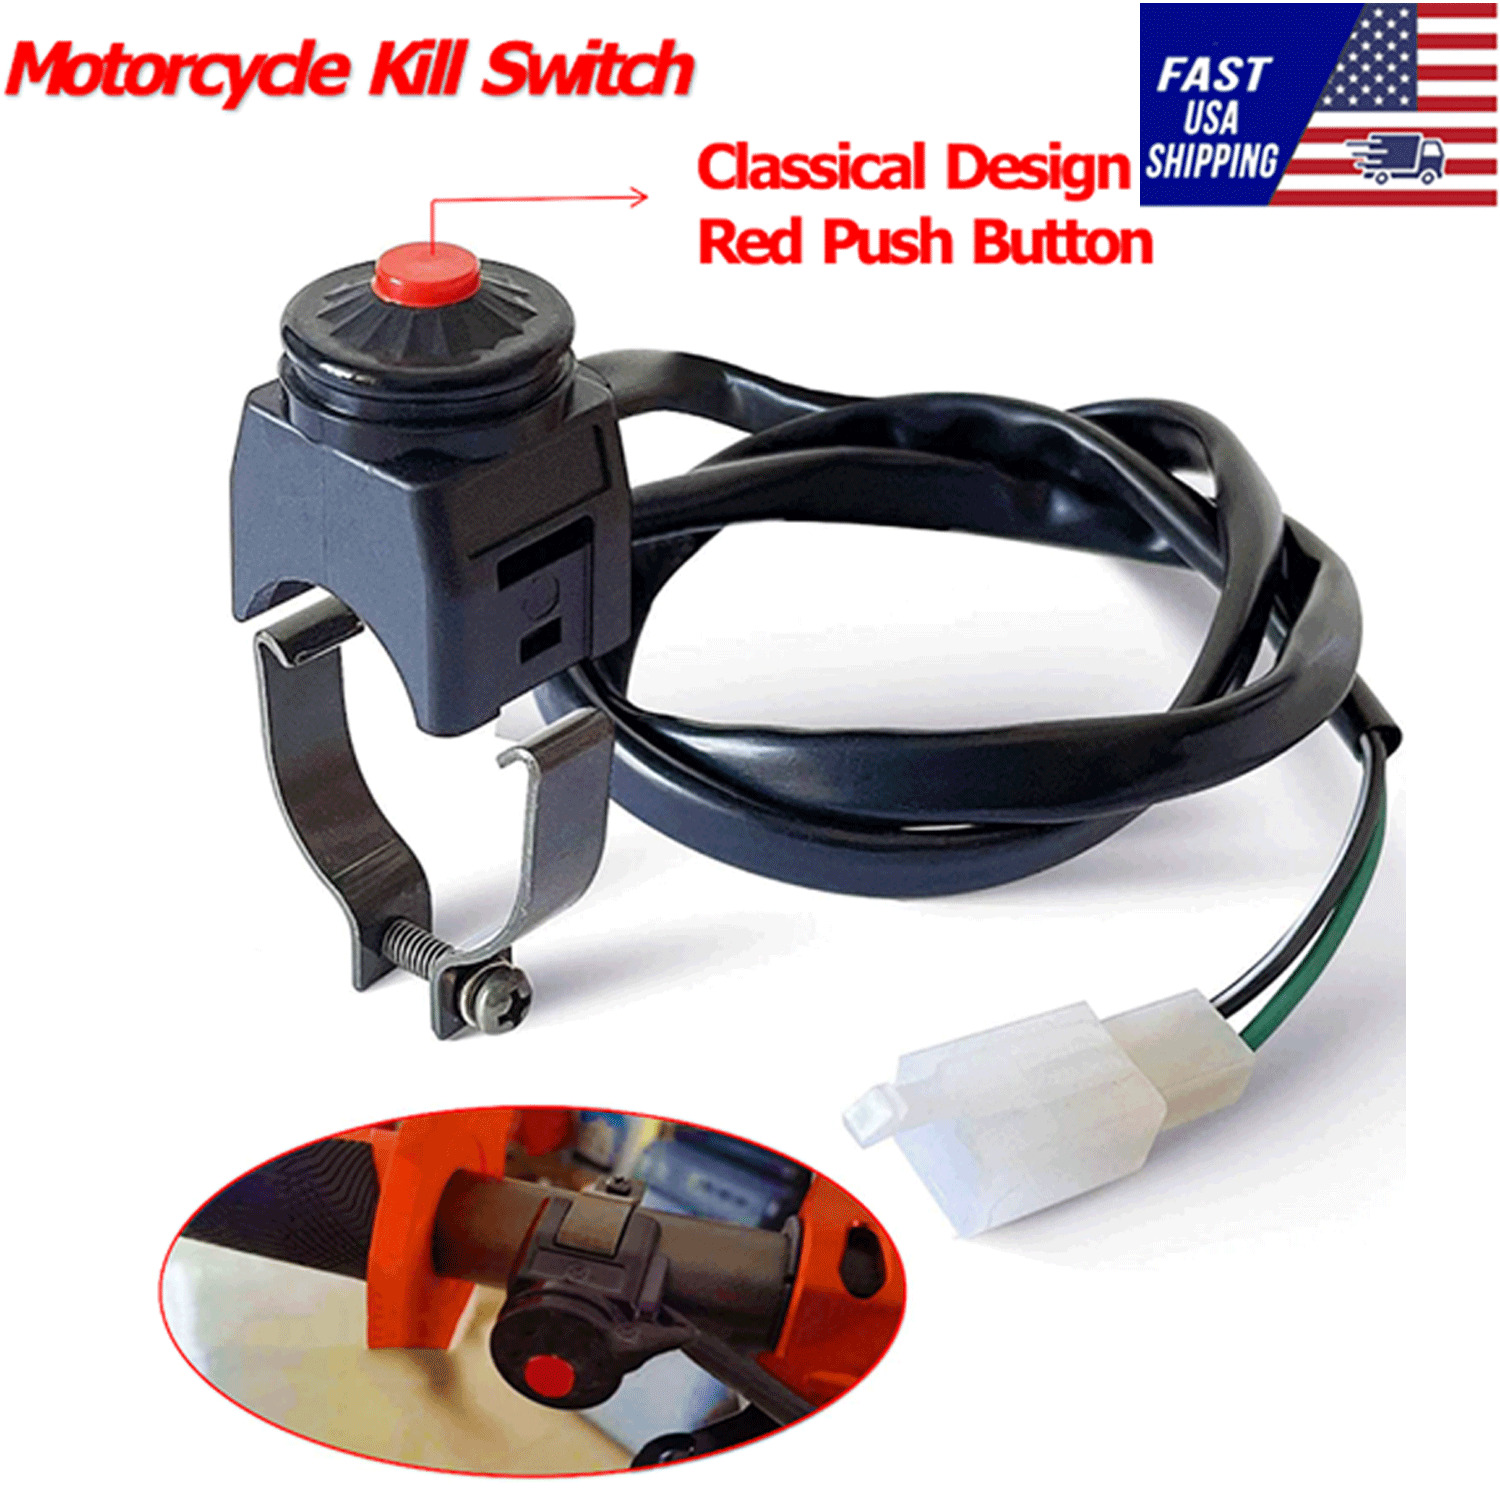 Motorcycle KILL SWITCH Red Push Button Horn Starter Dirt Bike KTM ATV Dual Sport